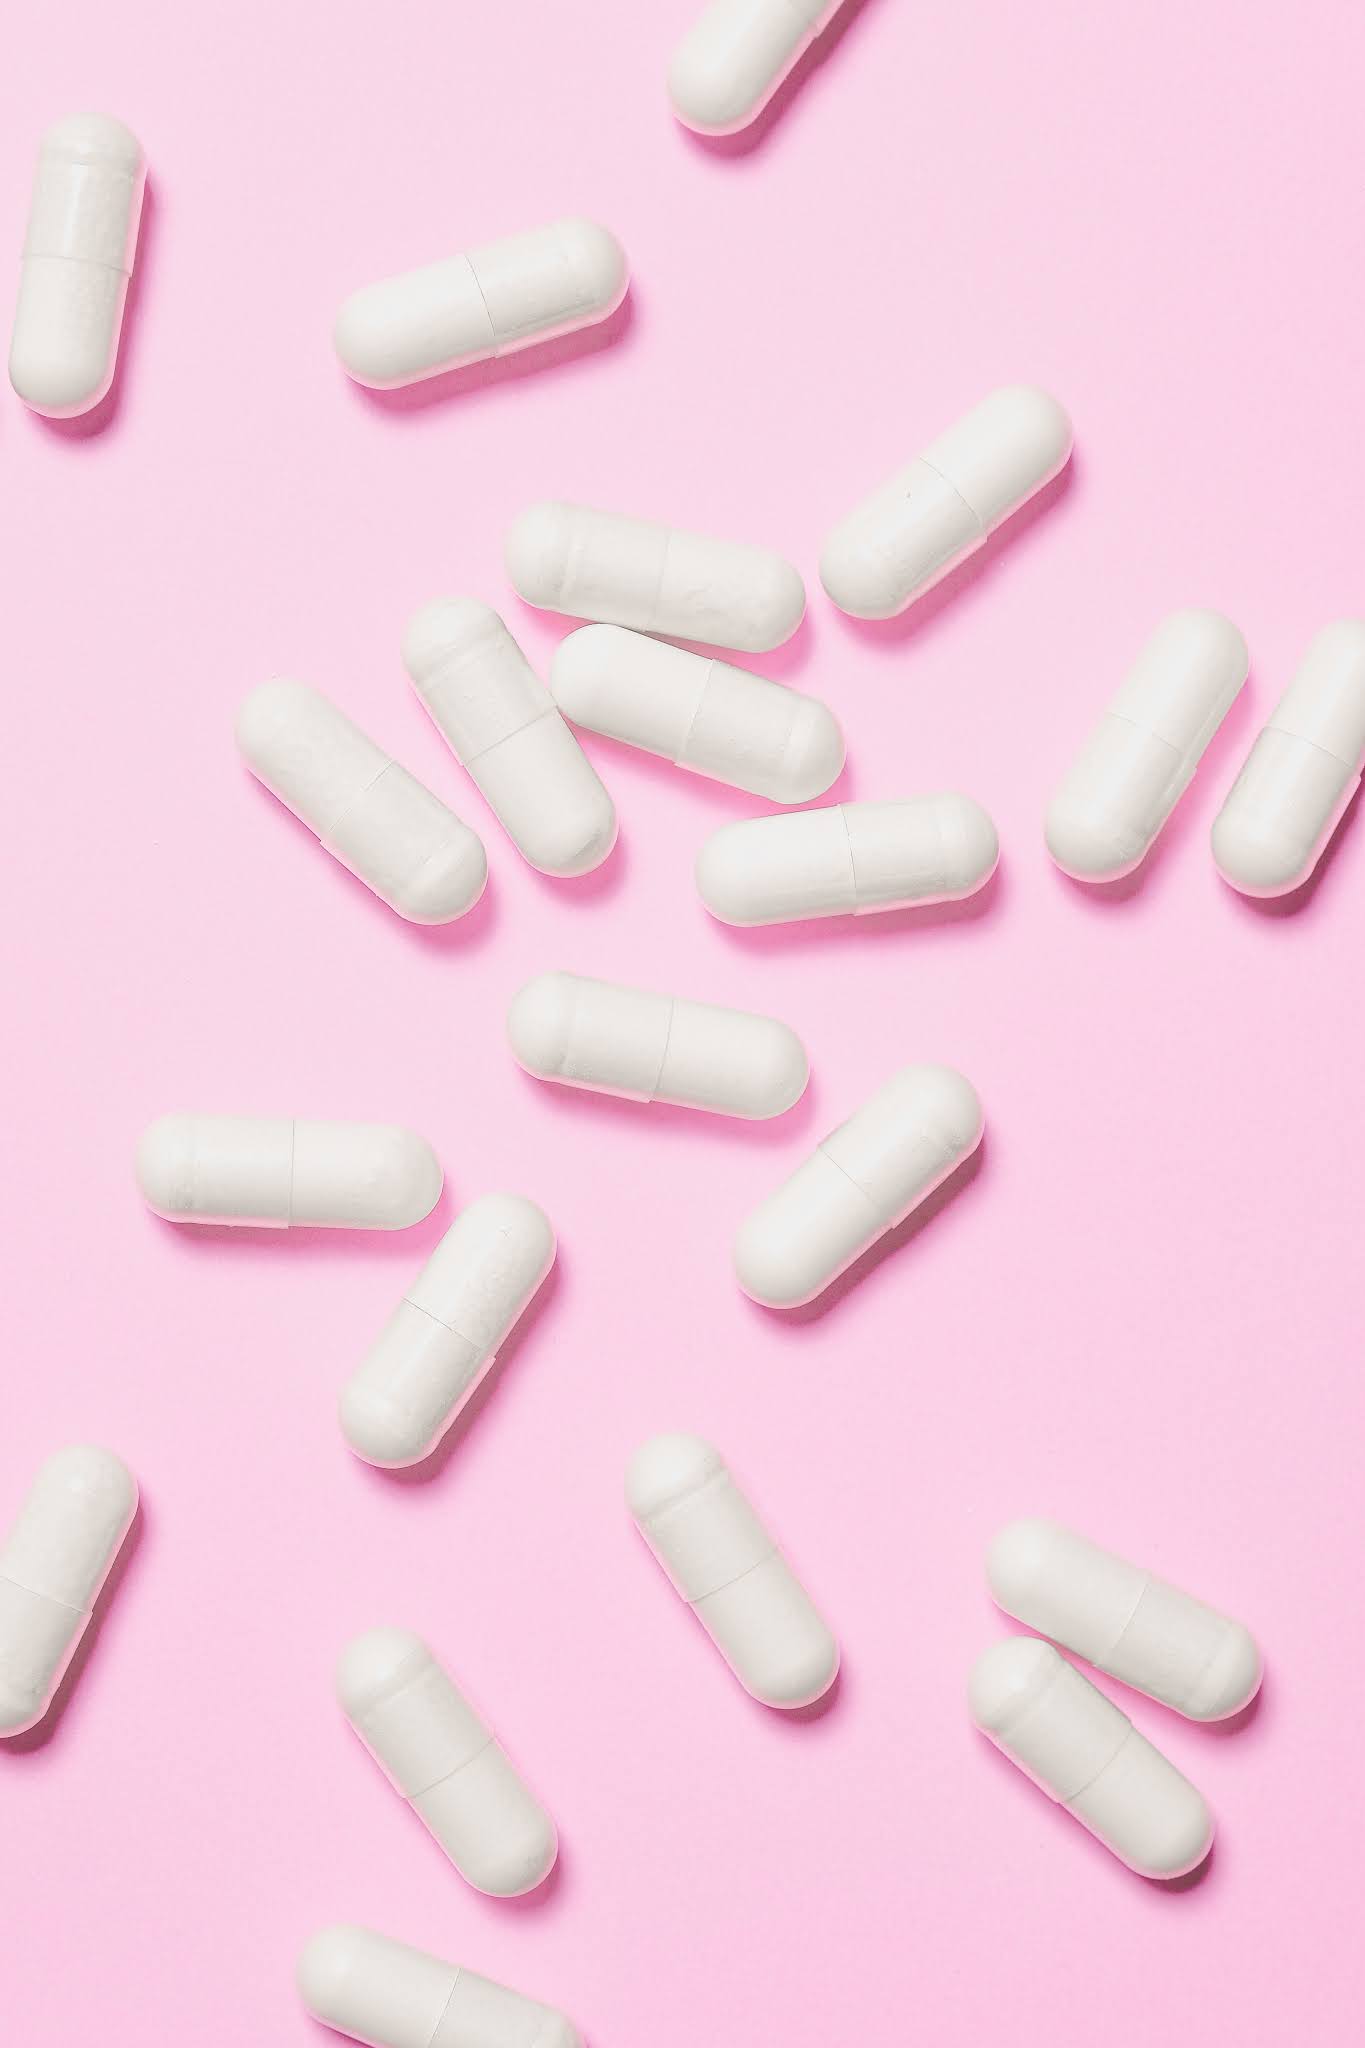 Vitamins scattered on pink background